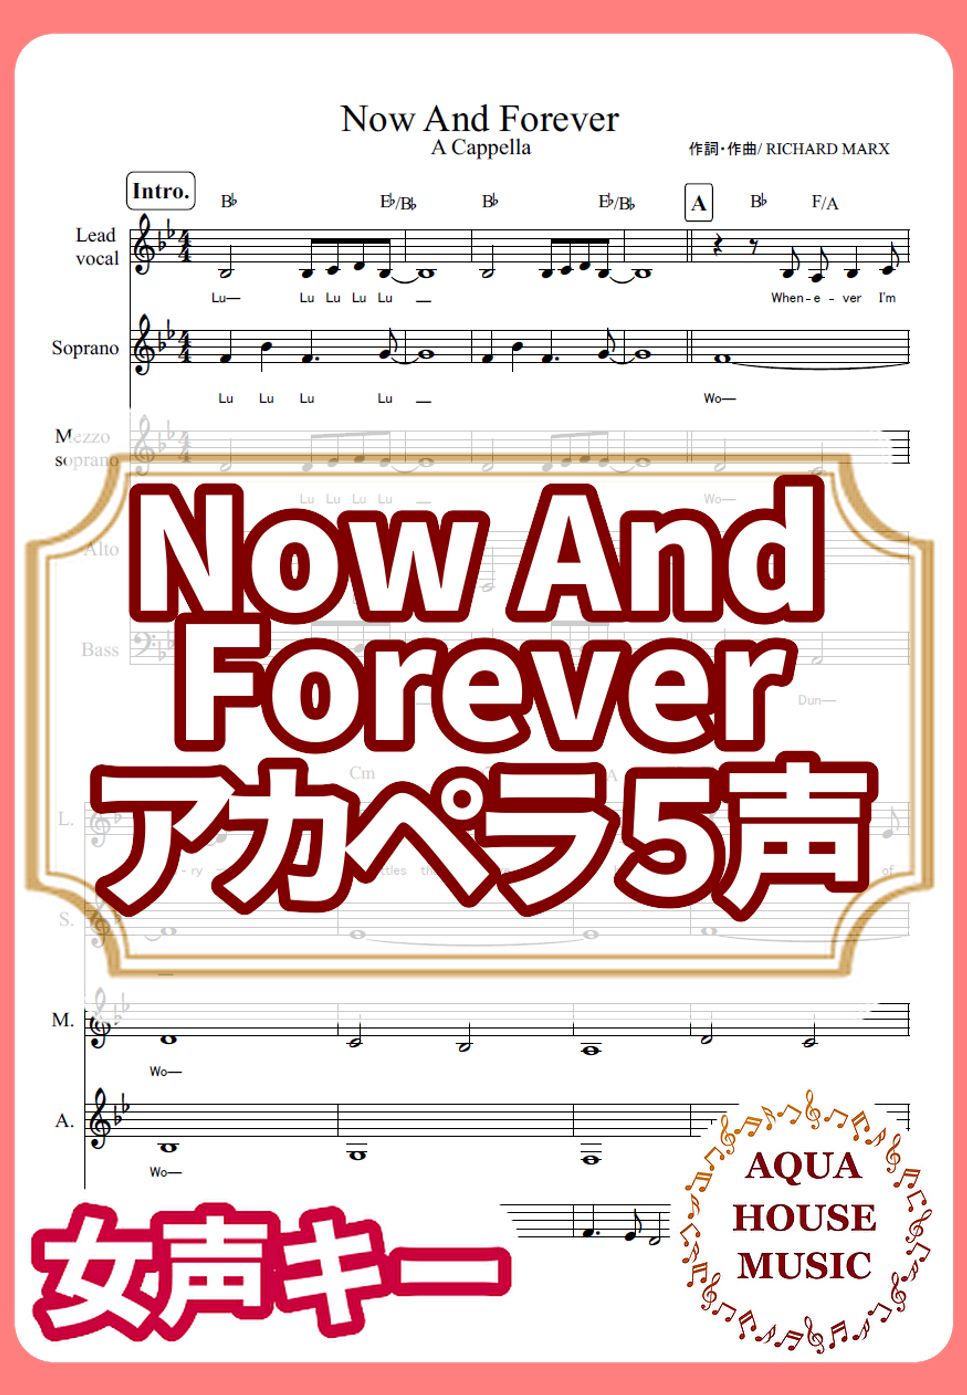 Richard Marx - Now And Forever (アカペラ楽譜♪5声ボイパなし) by 飯田 亜紗子